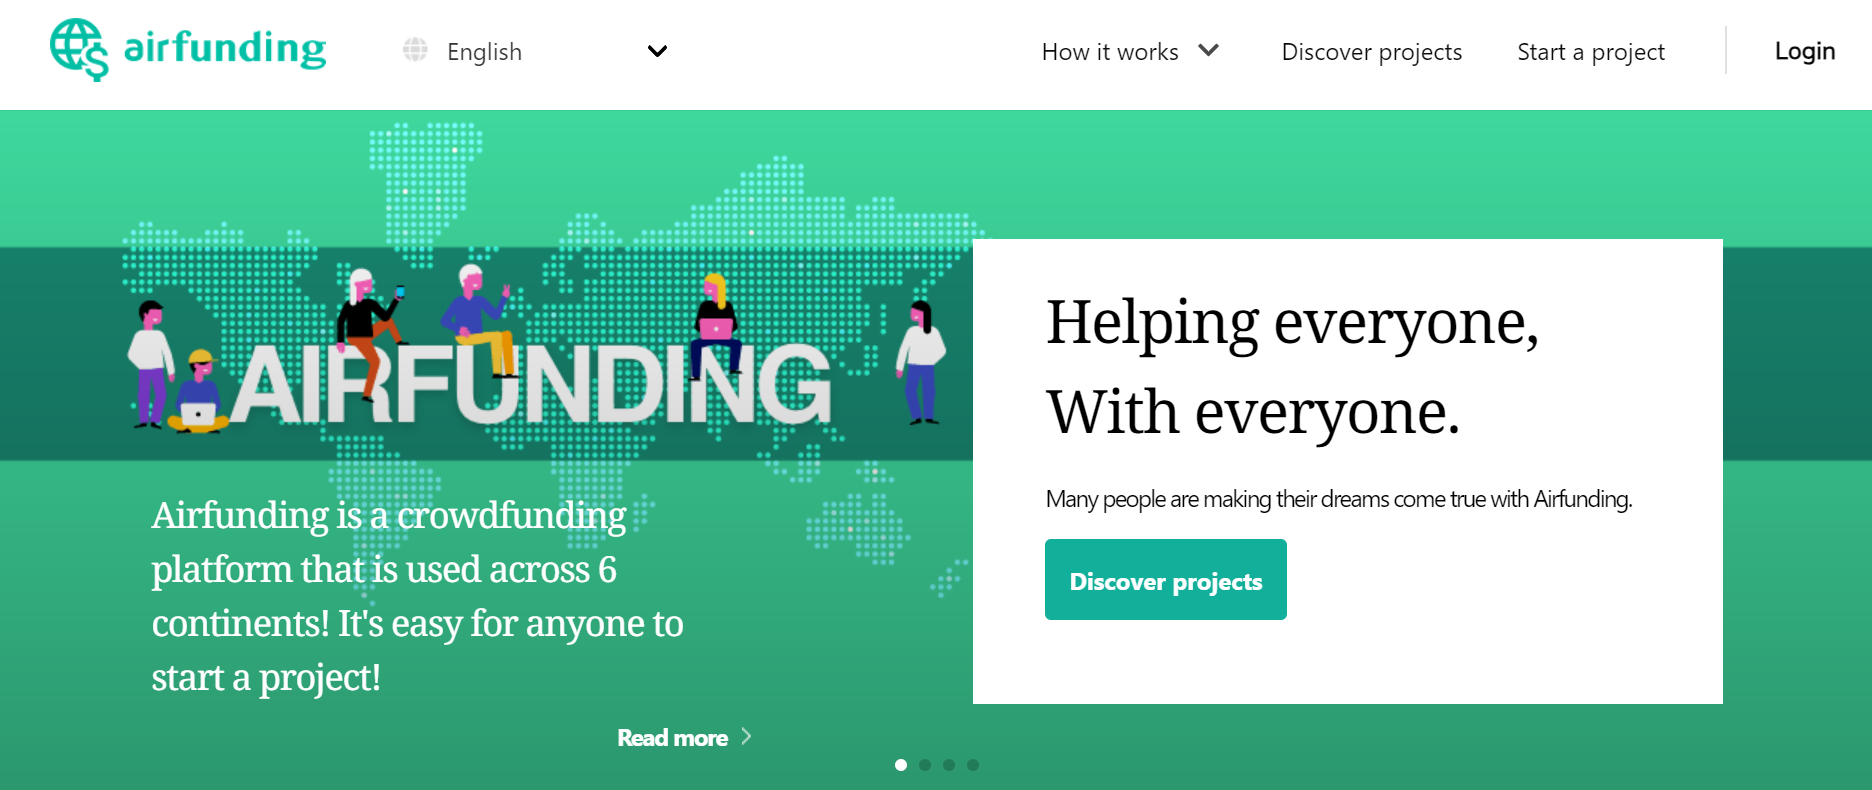 crowdfunding platforms philippines - airfunding